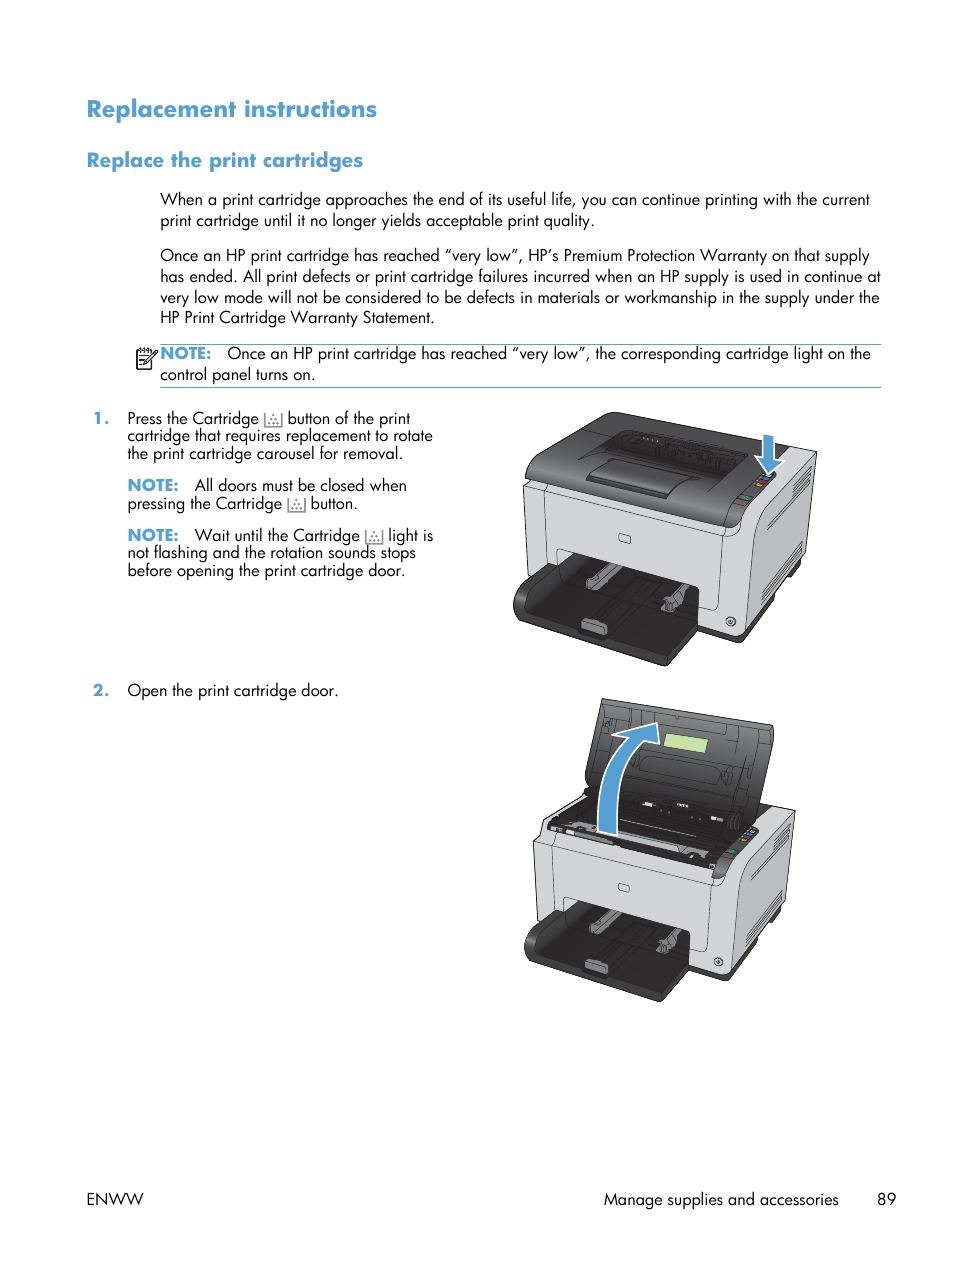 belastning Lære udenad damper Replacement instructions, Replace the print cartridges | HP LaserJet Pro CP1025nw  Color Printer User Manual | Page 101 / 186